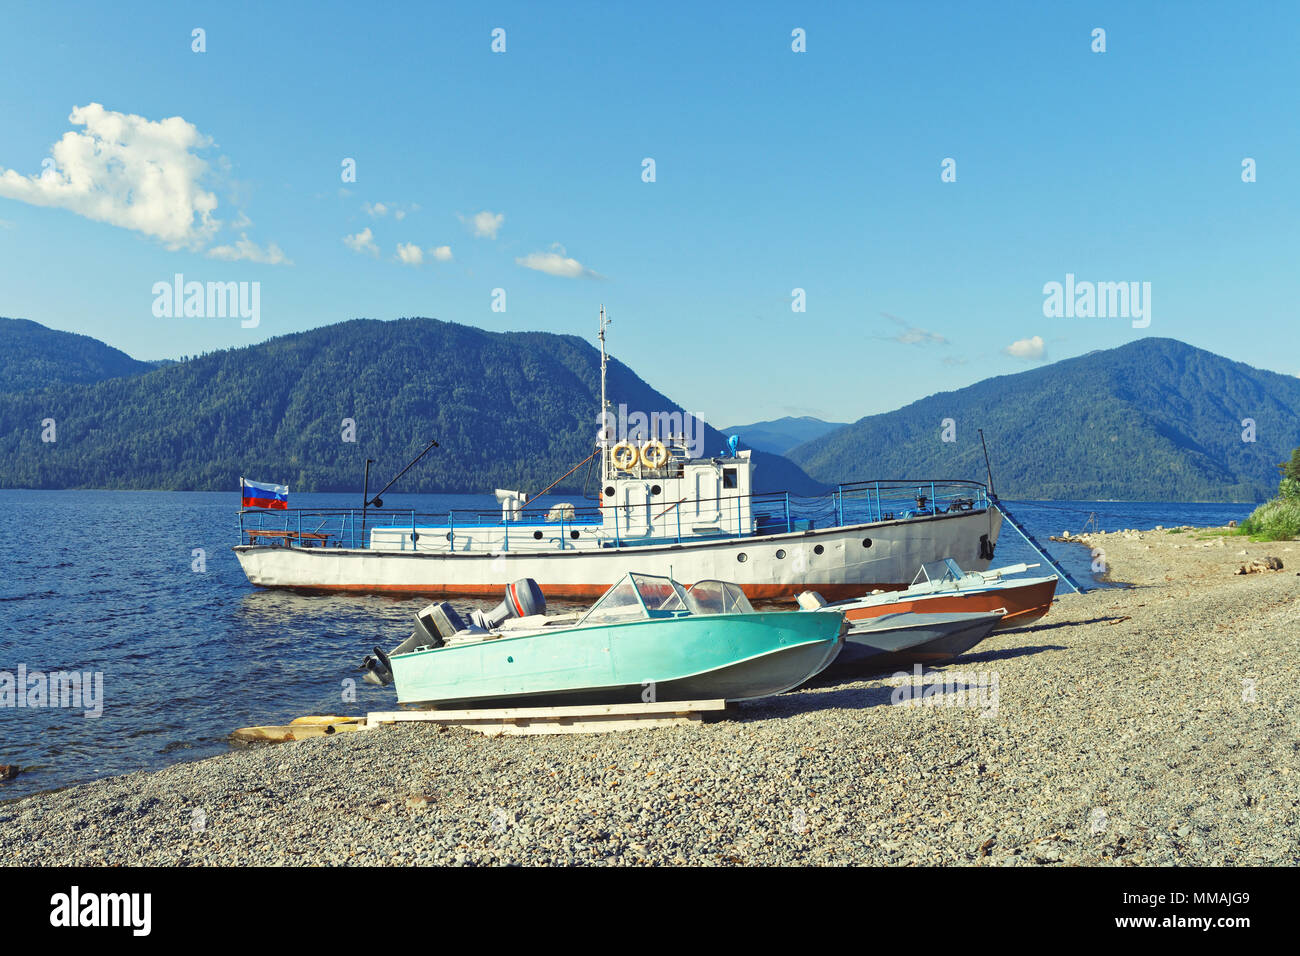 Siberia, Teletskoye lake. Passenger vessel and motor boats moored near the shore Stock Photo